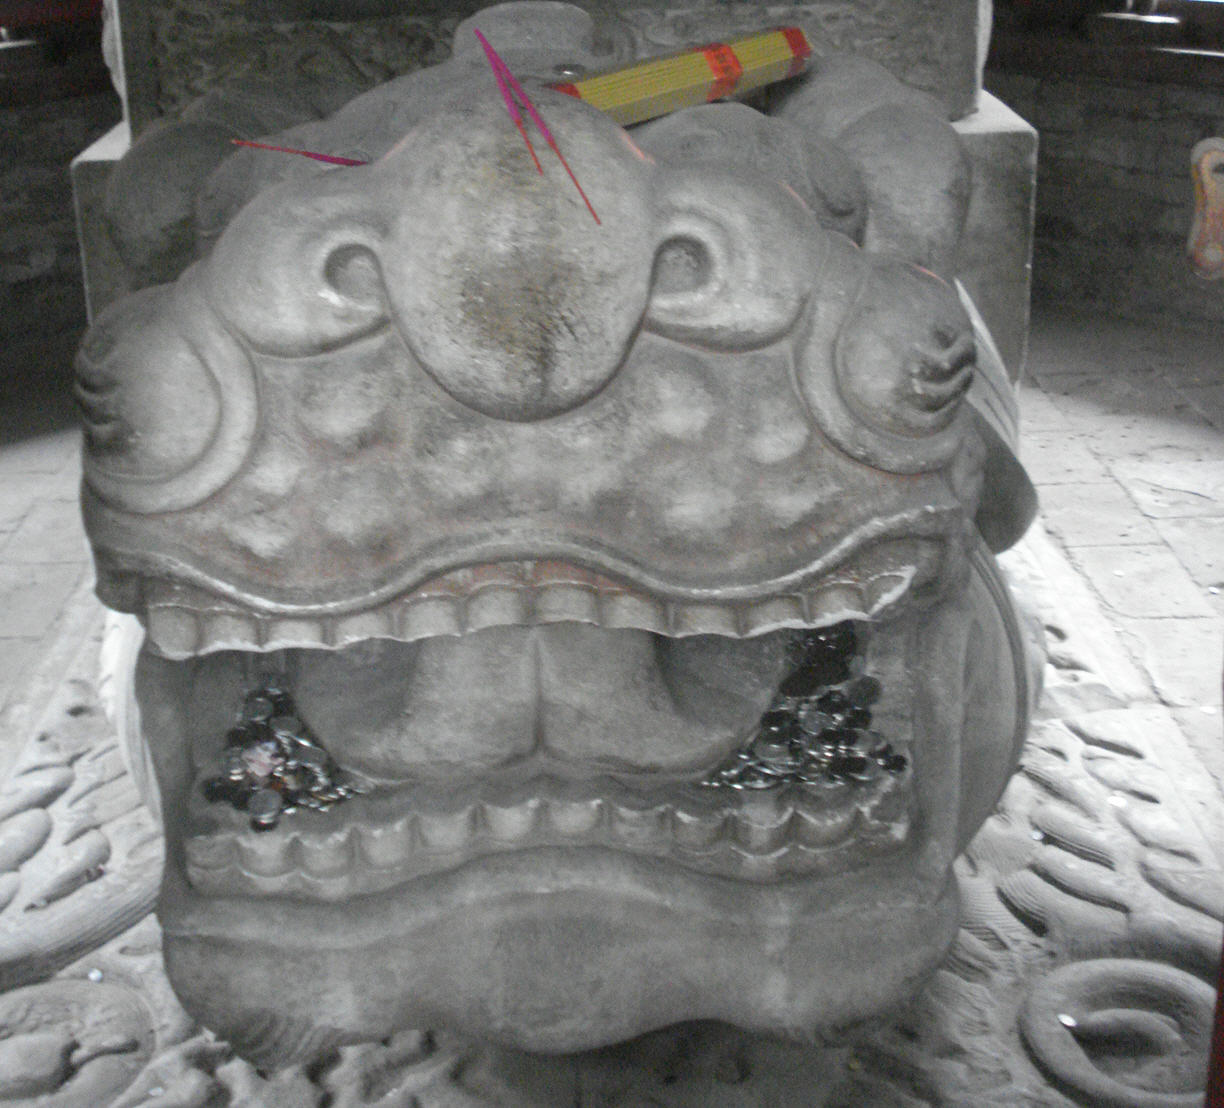 a stone dragon statue in the corner of a room